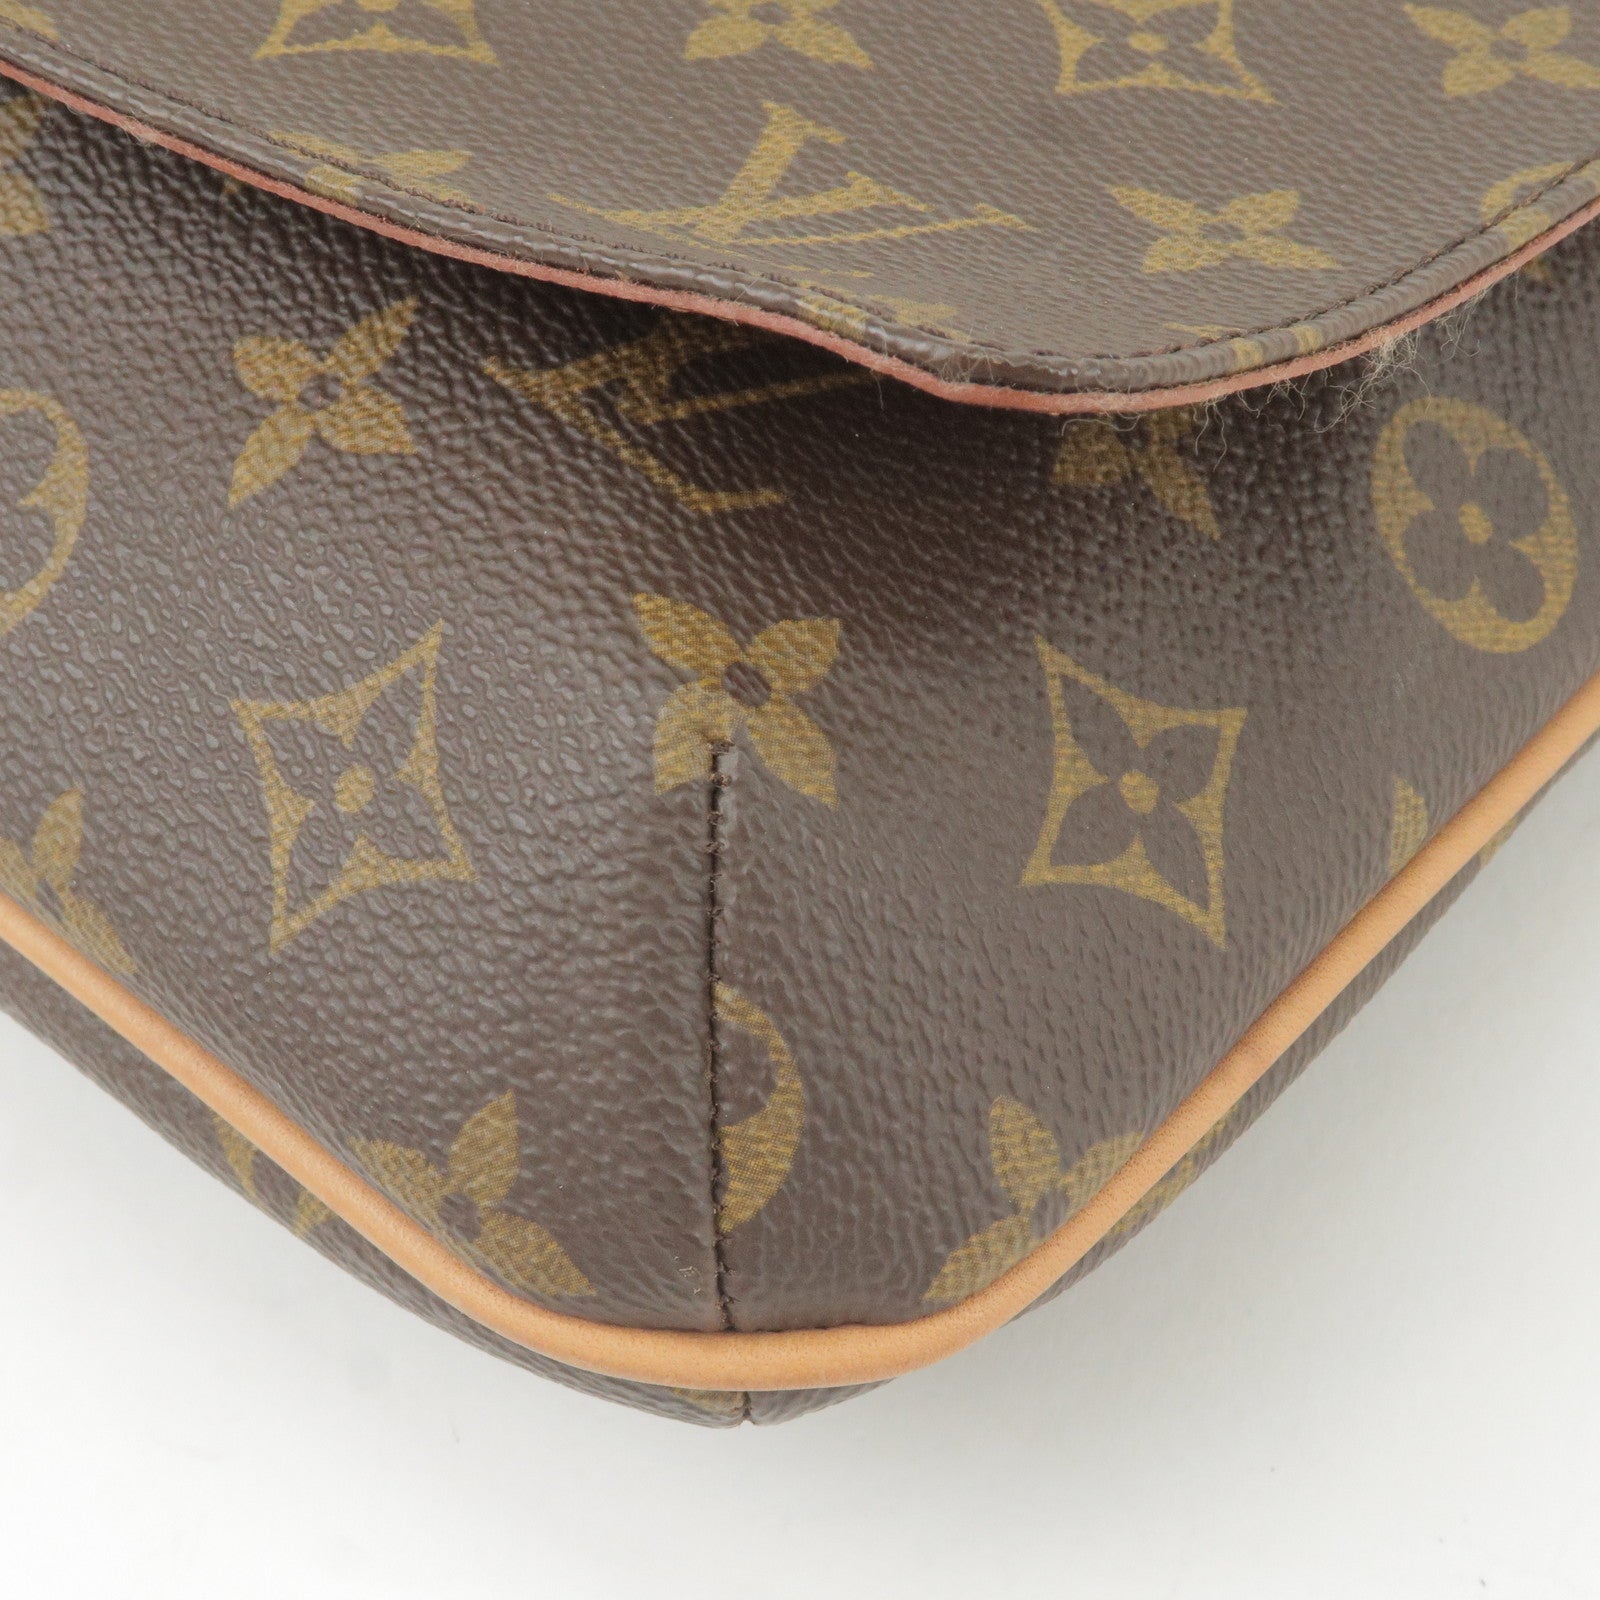 Short - Vuitton - M51257 – dct - Monogram - Louis Vuitton pre-owned frayed  cashmere scarf - Tango - Musette - ep_vintage luxury Store - Bag - Shoulder  - Louis